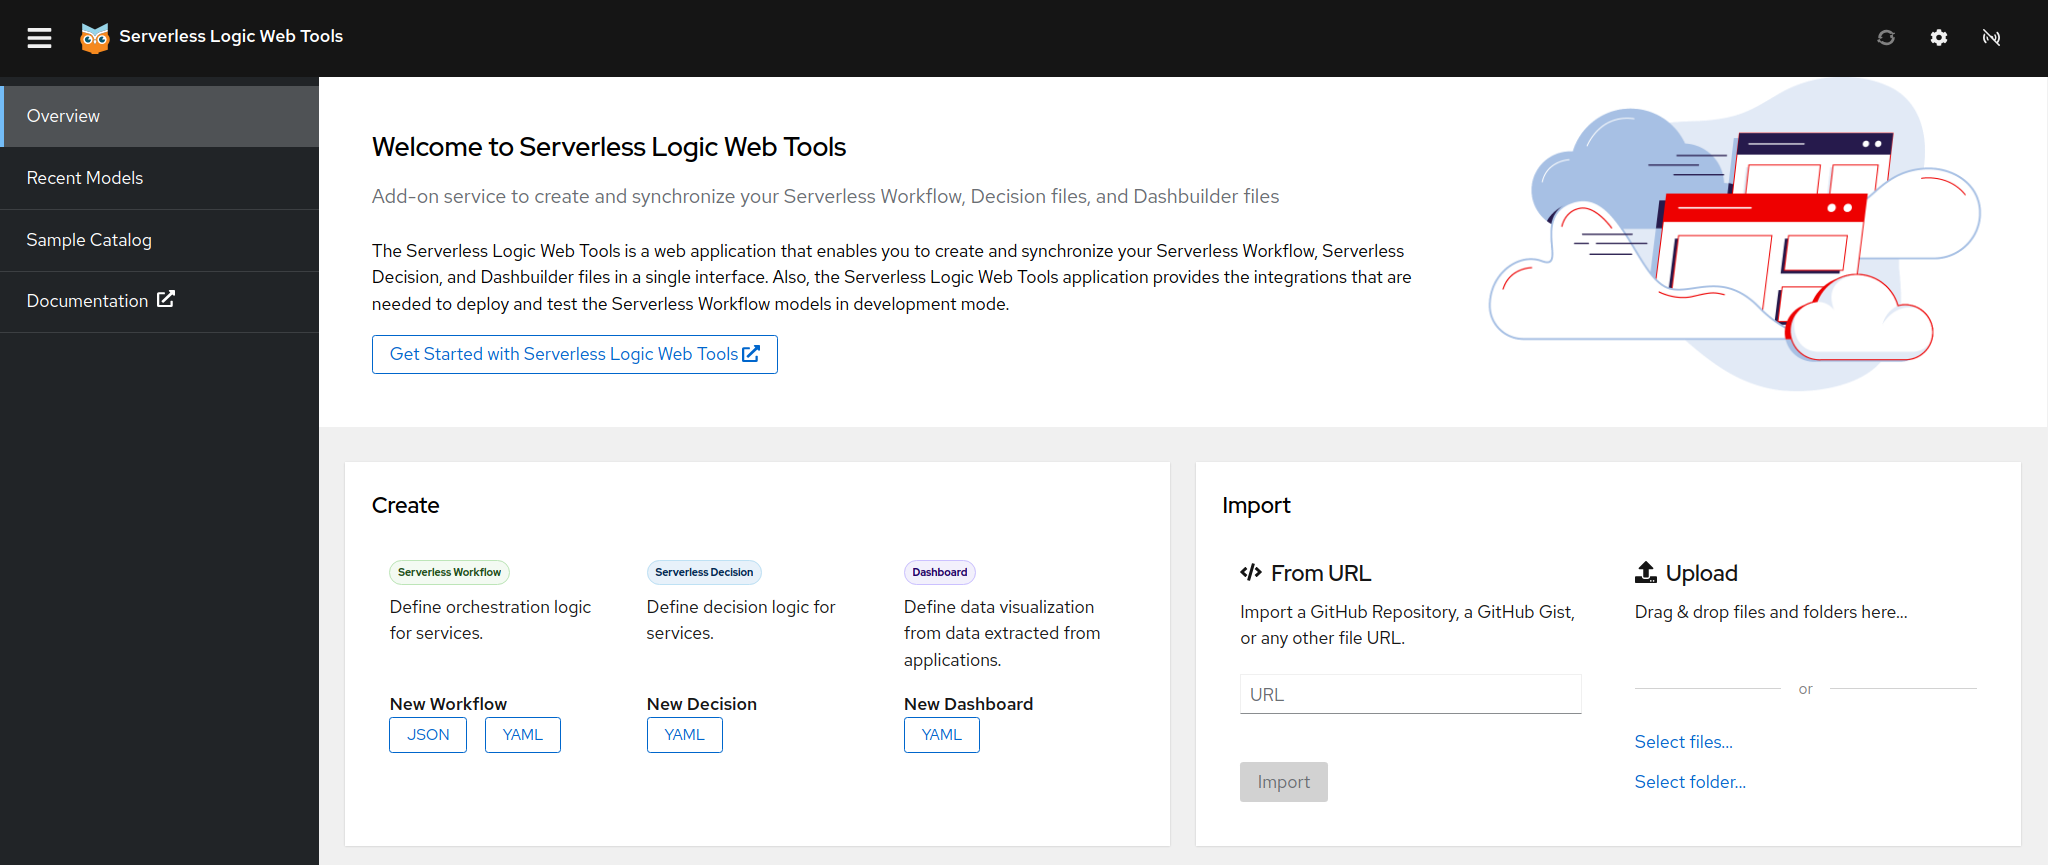 serverless logic web tools overview